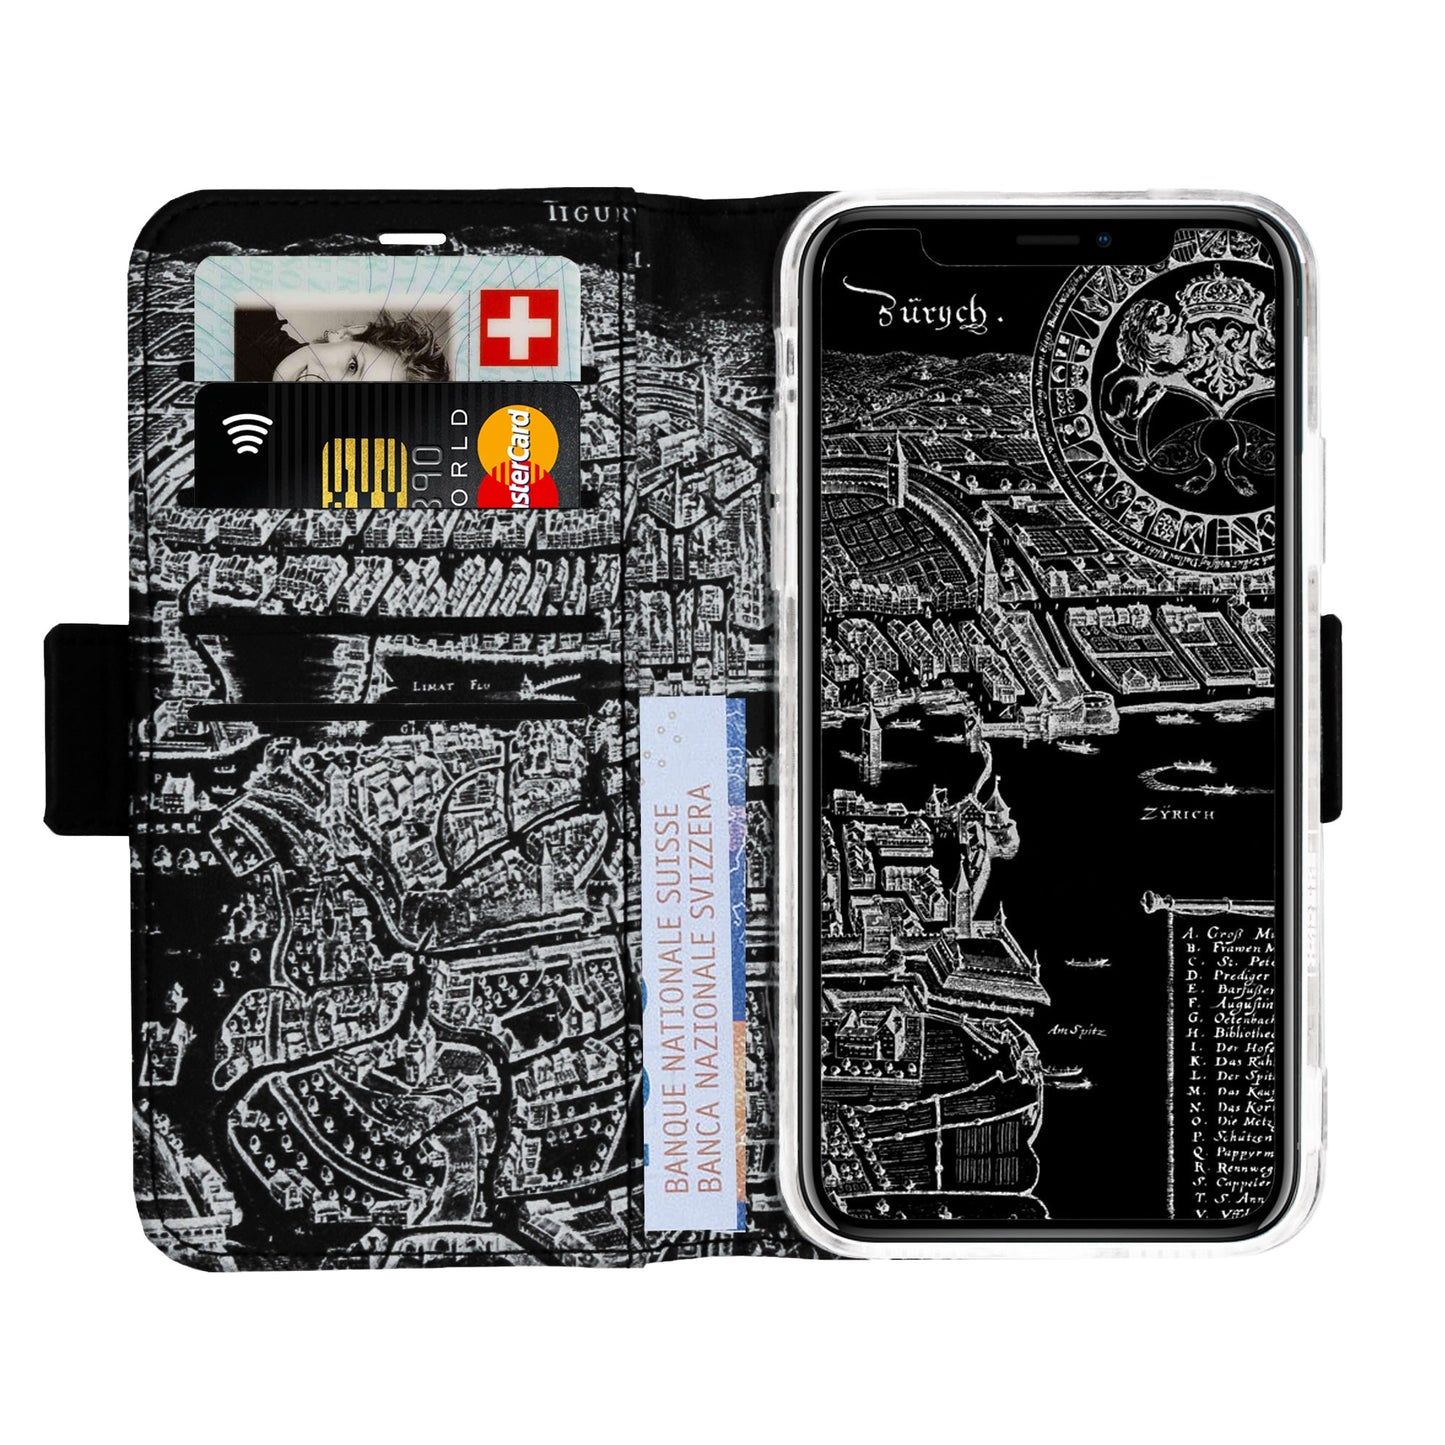 Zurich Merian Negative Victor Case for iPhone 11 Pro Max